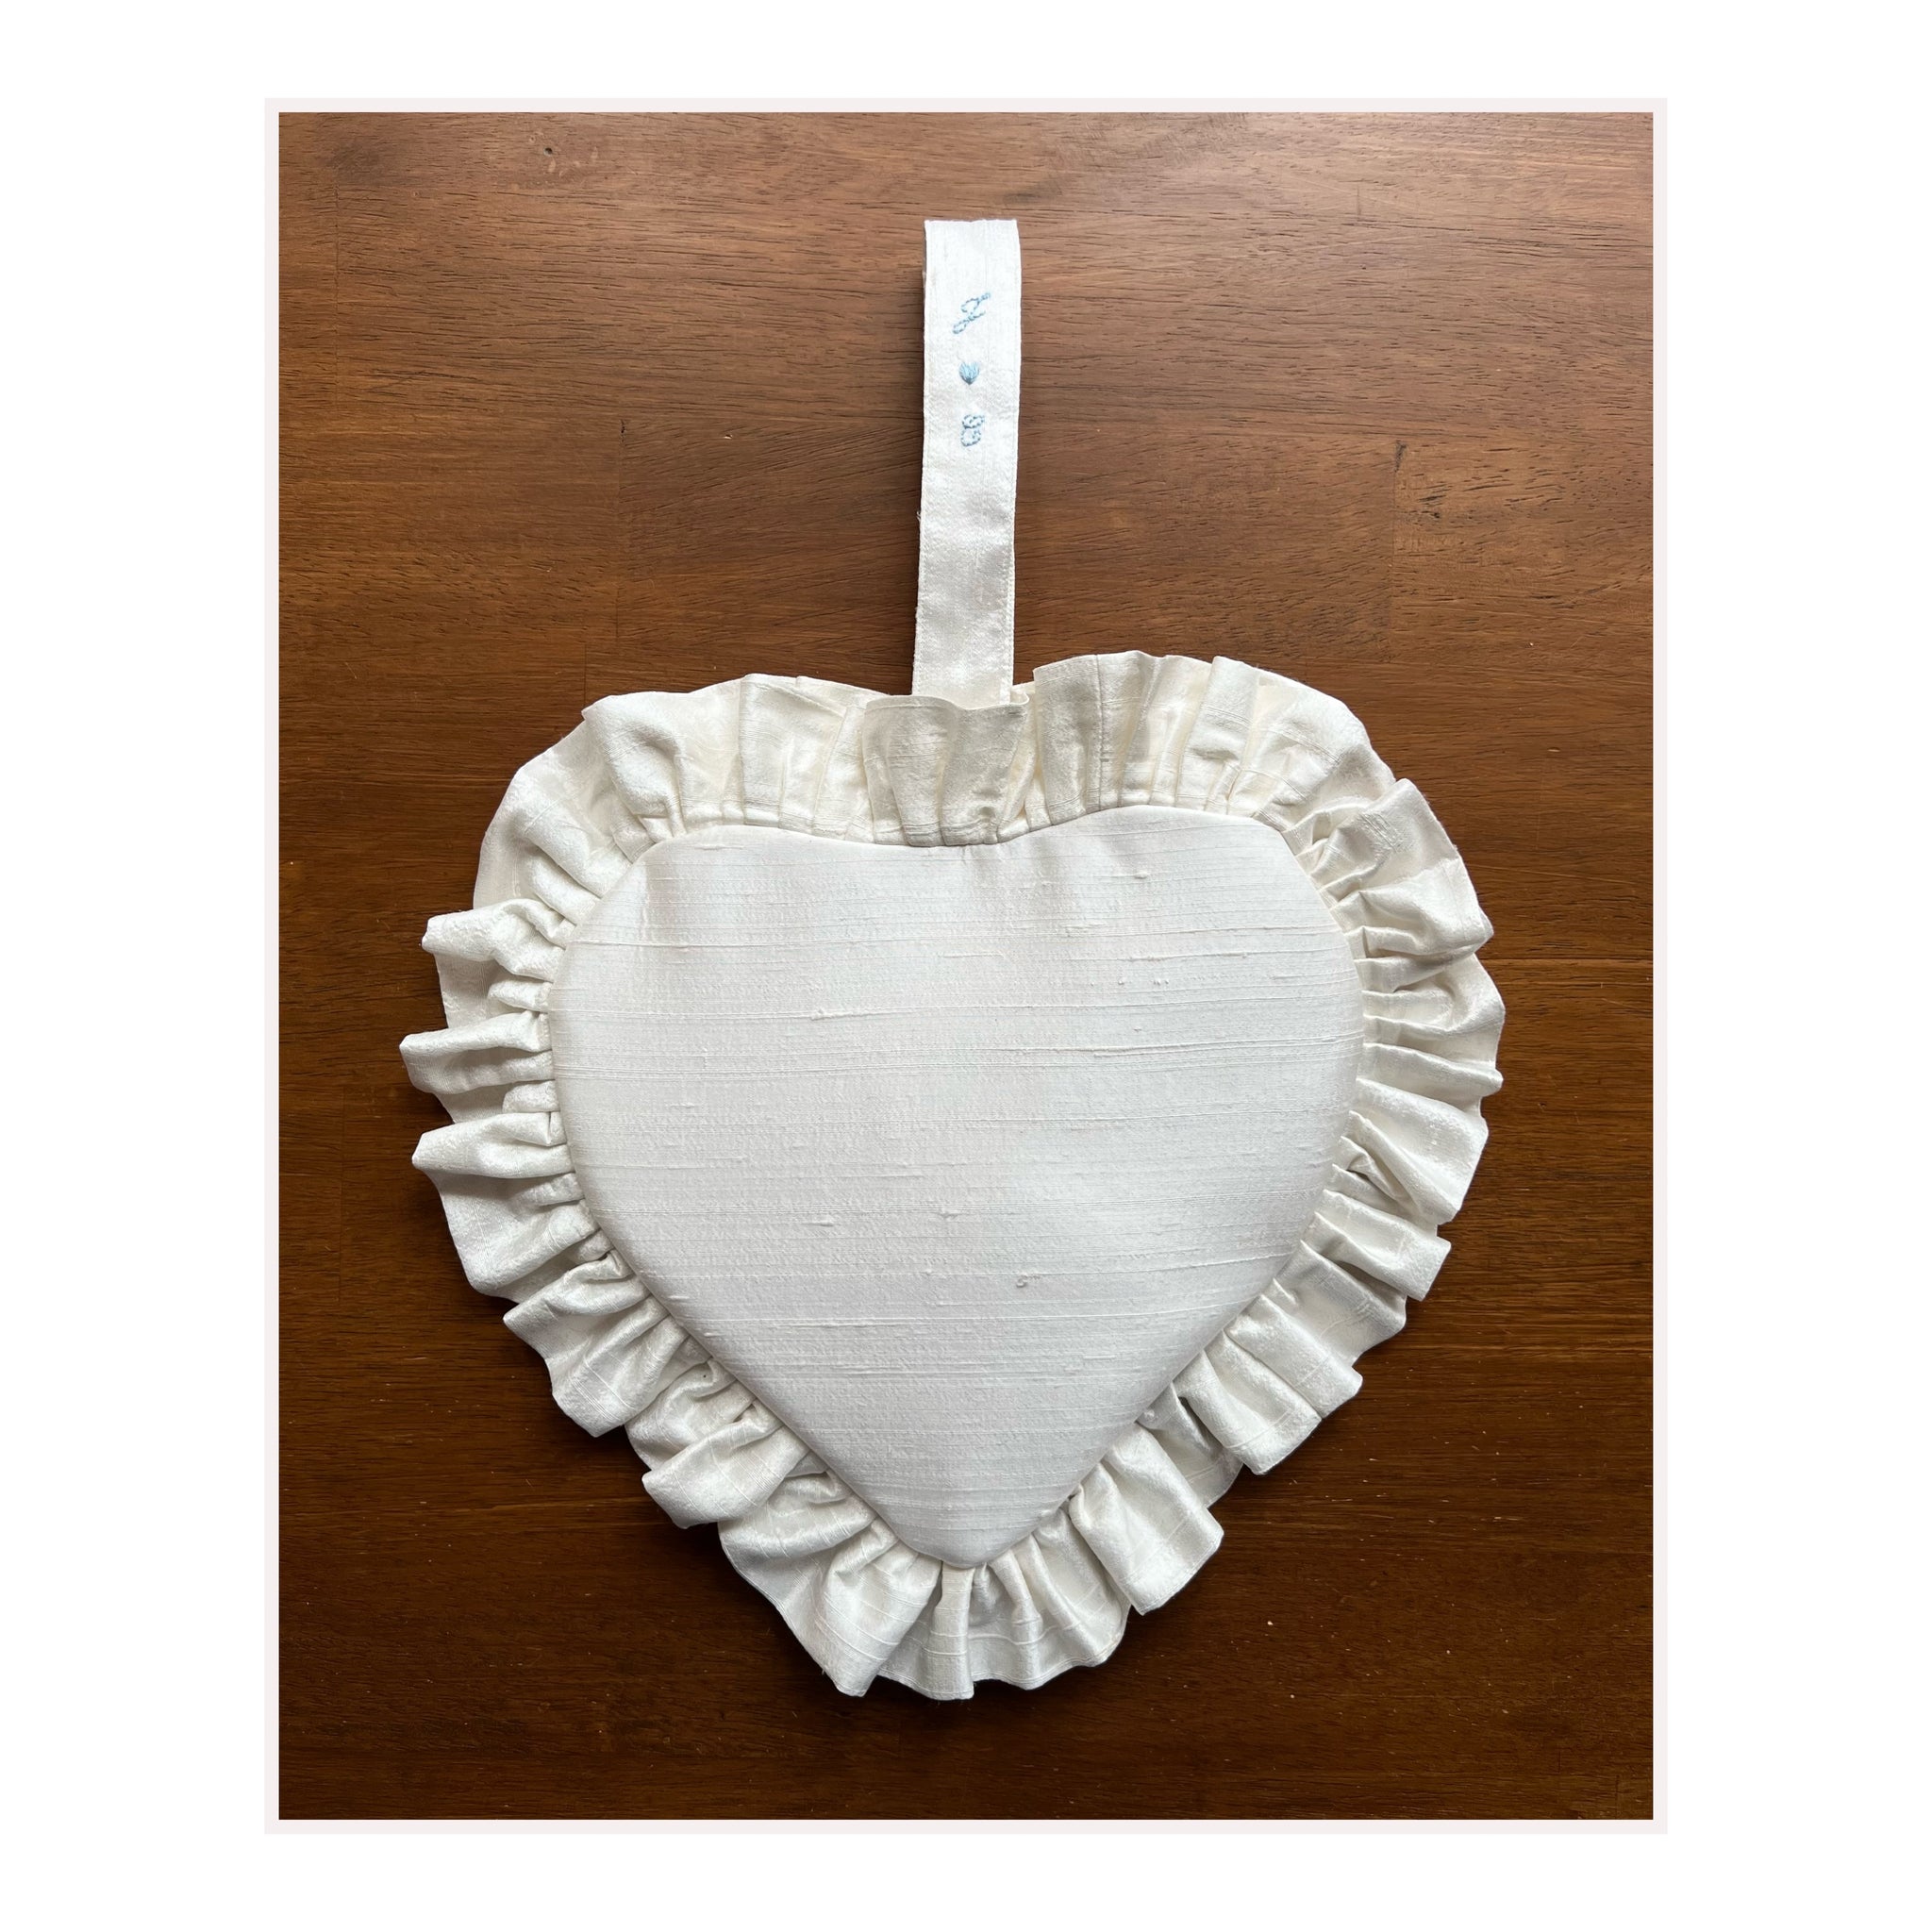 The Bridal Ruffle Heart Bag - Made-To-Order